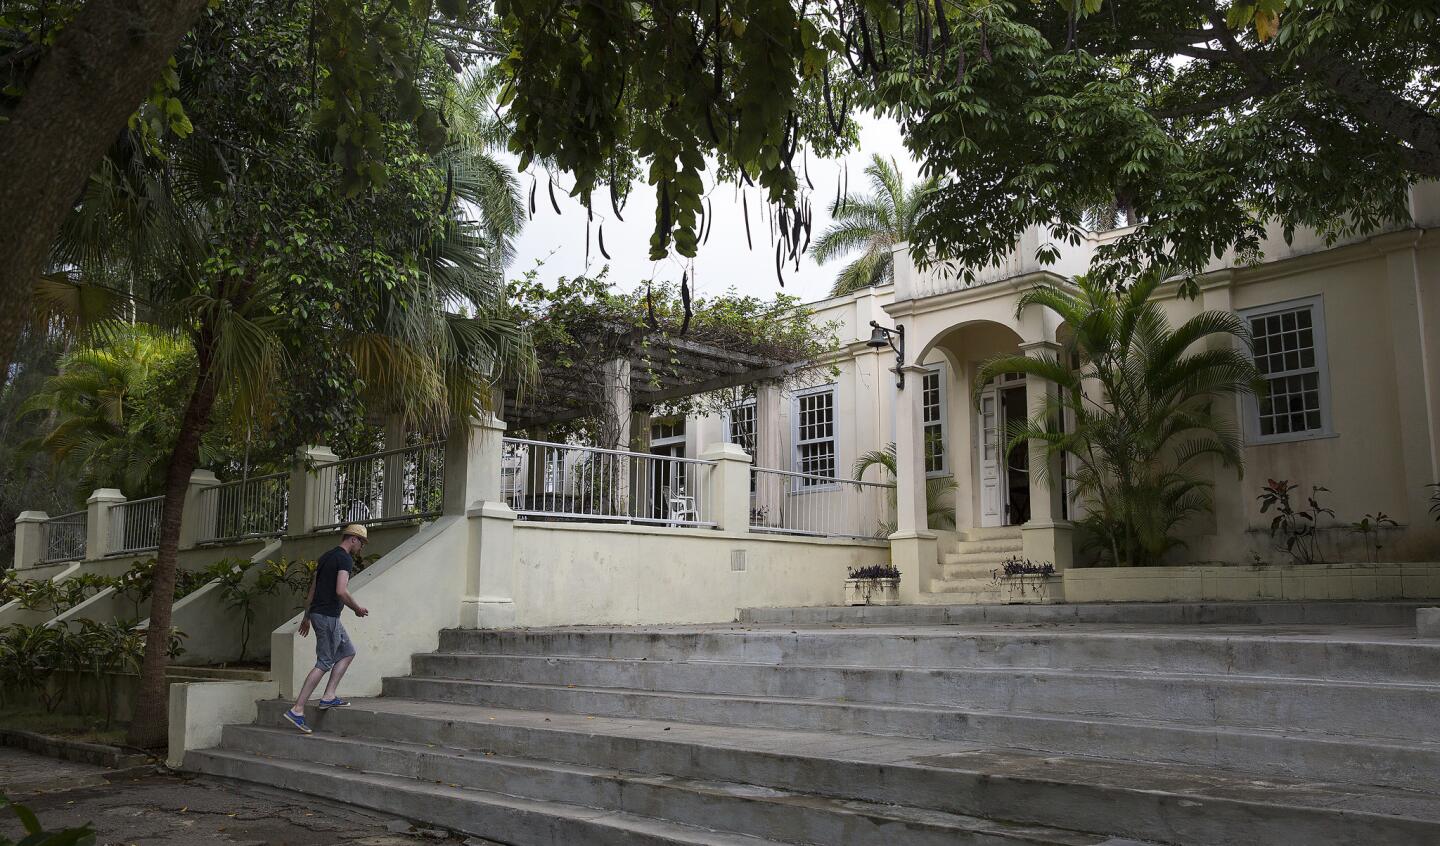 Ernest Hemingway's Cuban retreat, Finca Vigia, is now the Hemingway House and Museum.